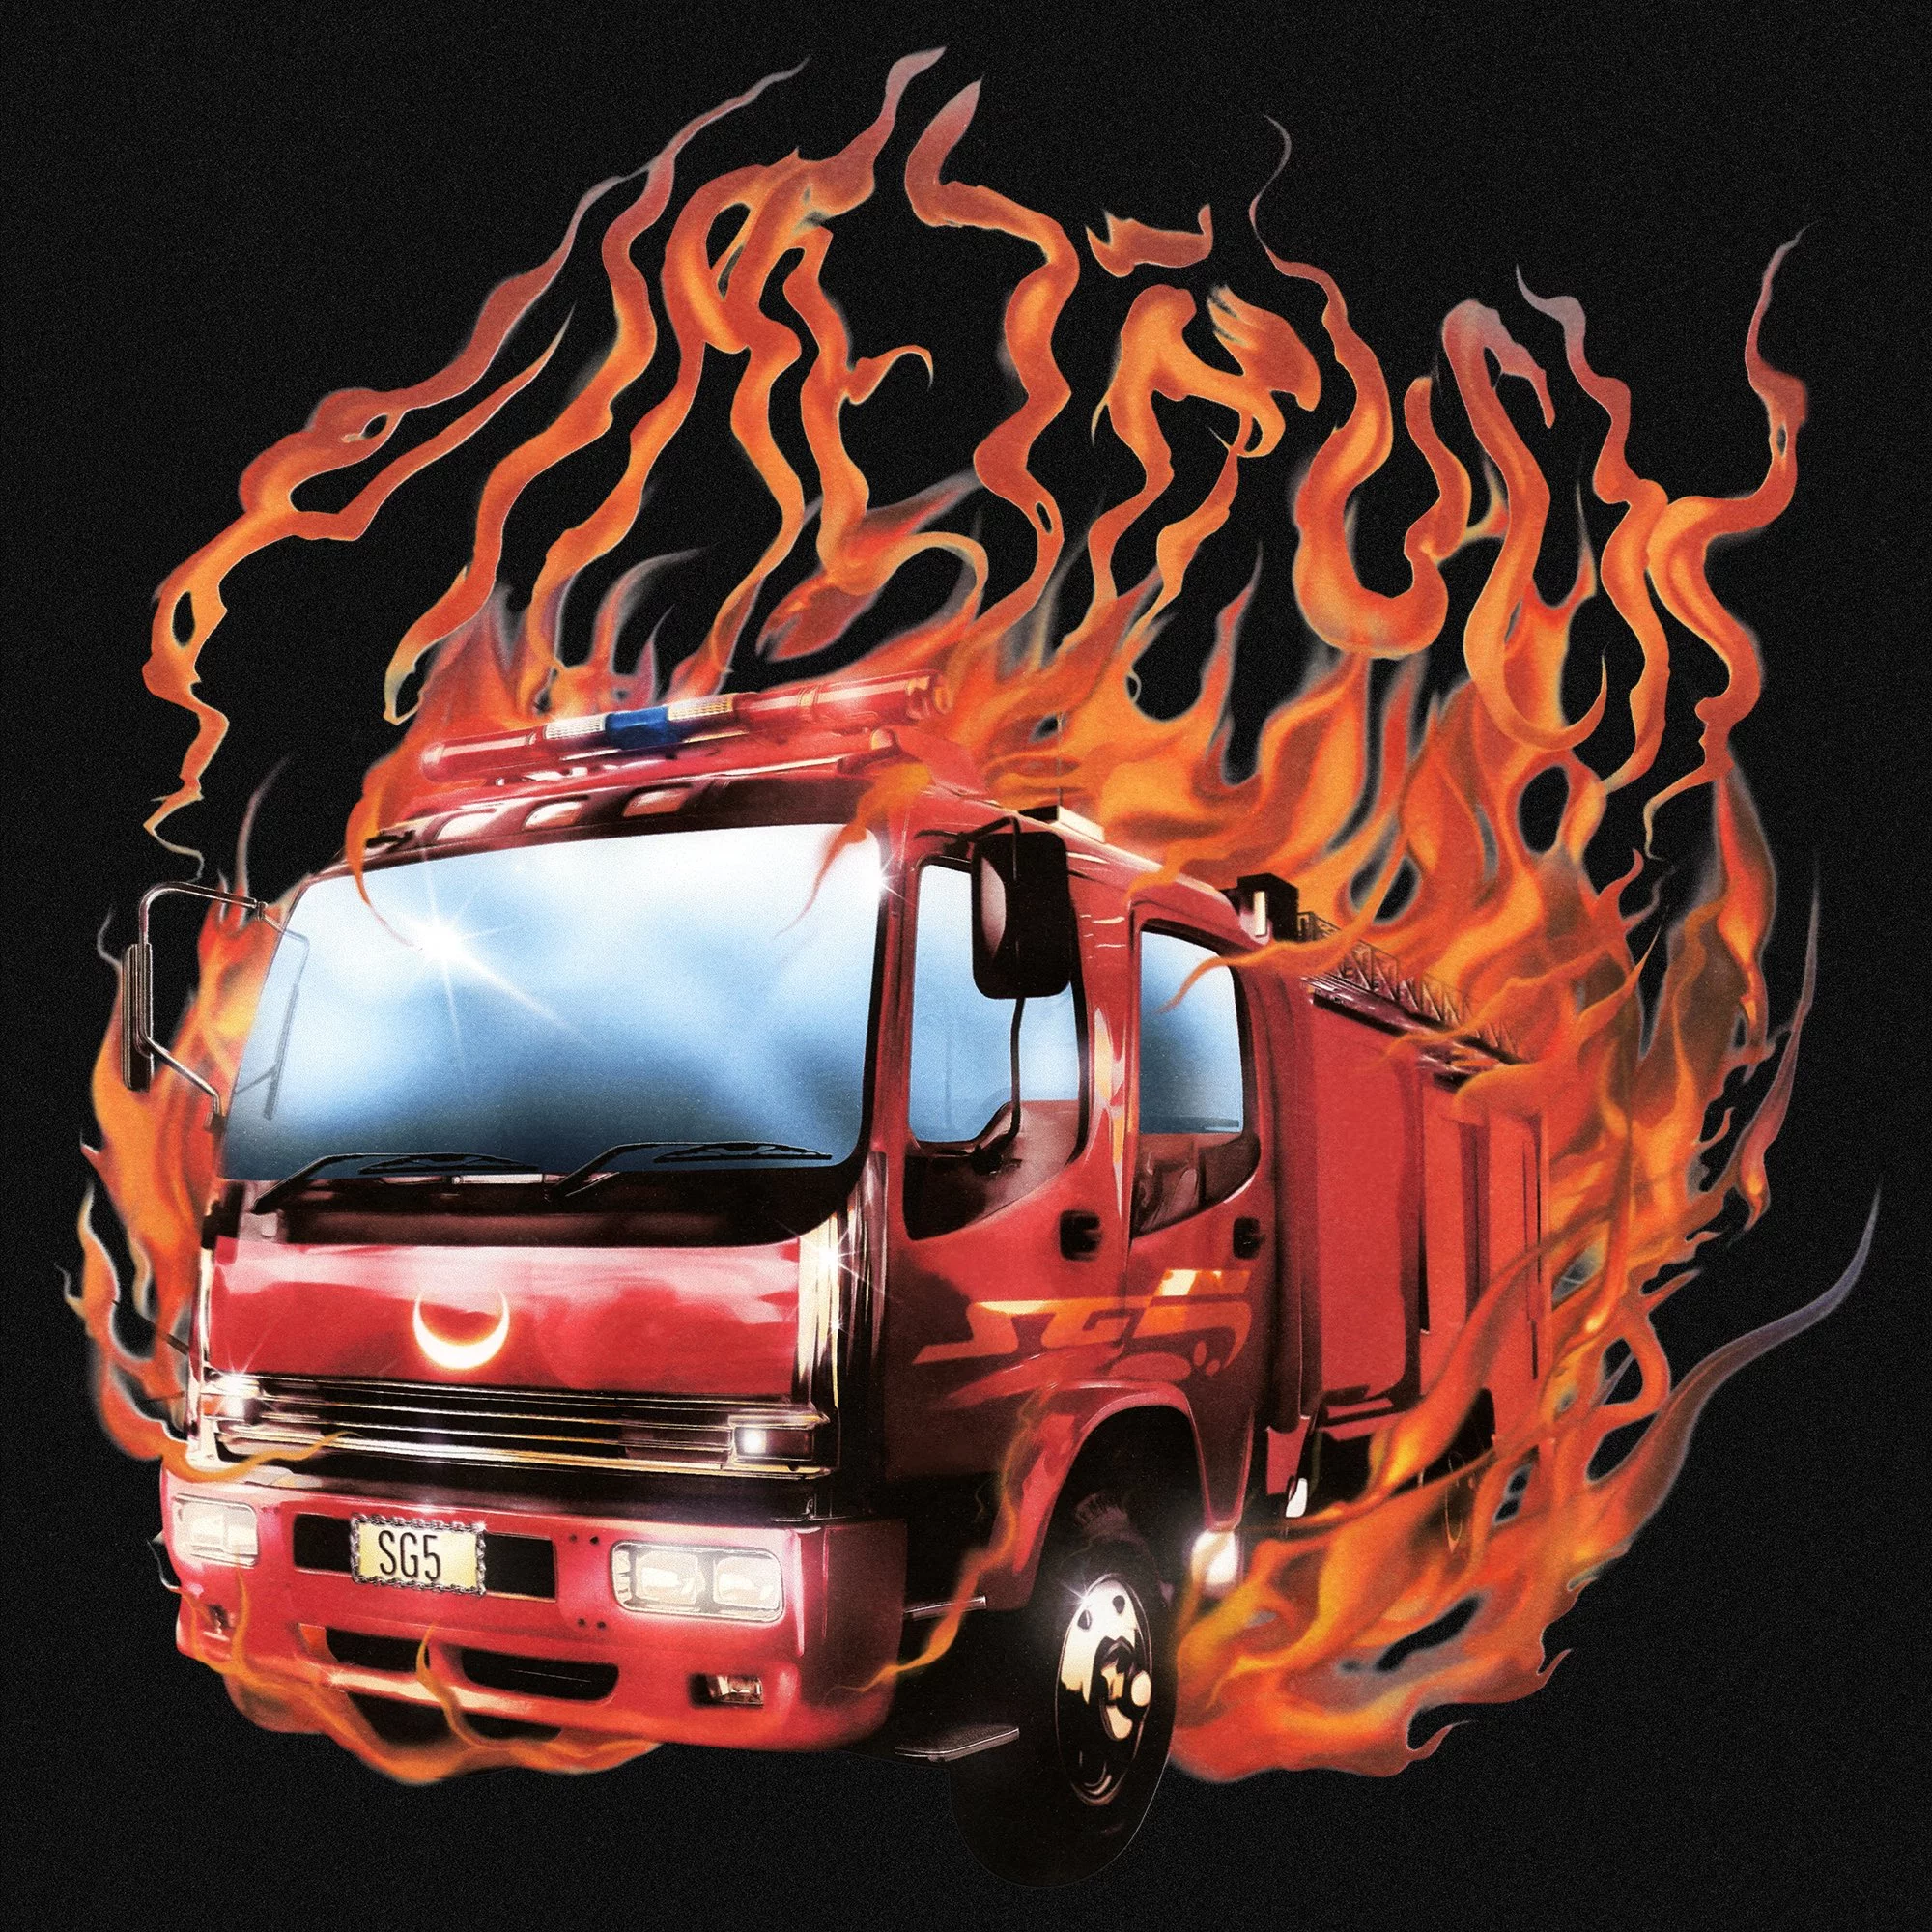 SG5 Firetruck cover artwork